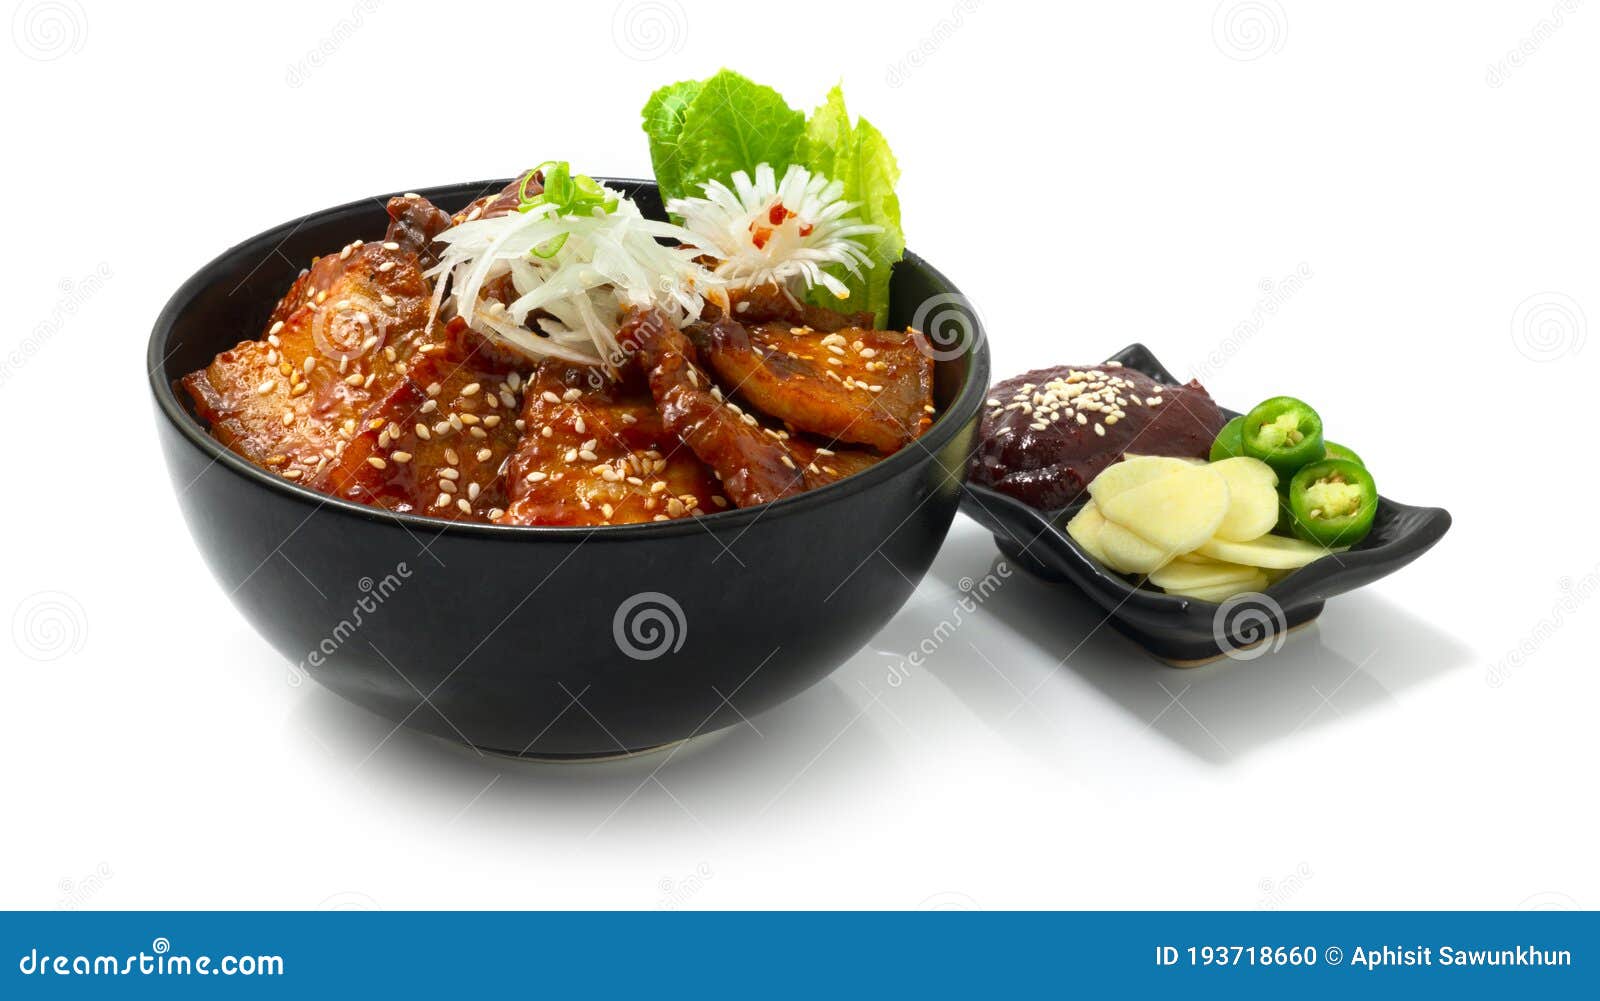 https://thumbs.dreamstime.com/z/spicy-grilled-pork-belly-kochujang-sauce-dwaeji-bulgogi-rice-recipe-ontop-onionslice-spicy-korean-bbq-bowl-spicy-grilled-193718660.jpg